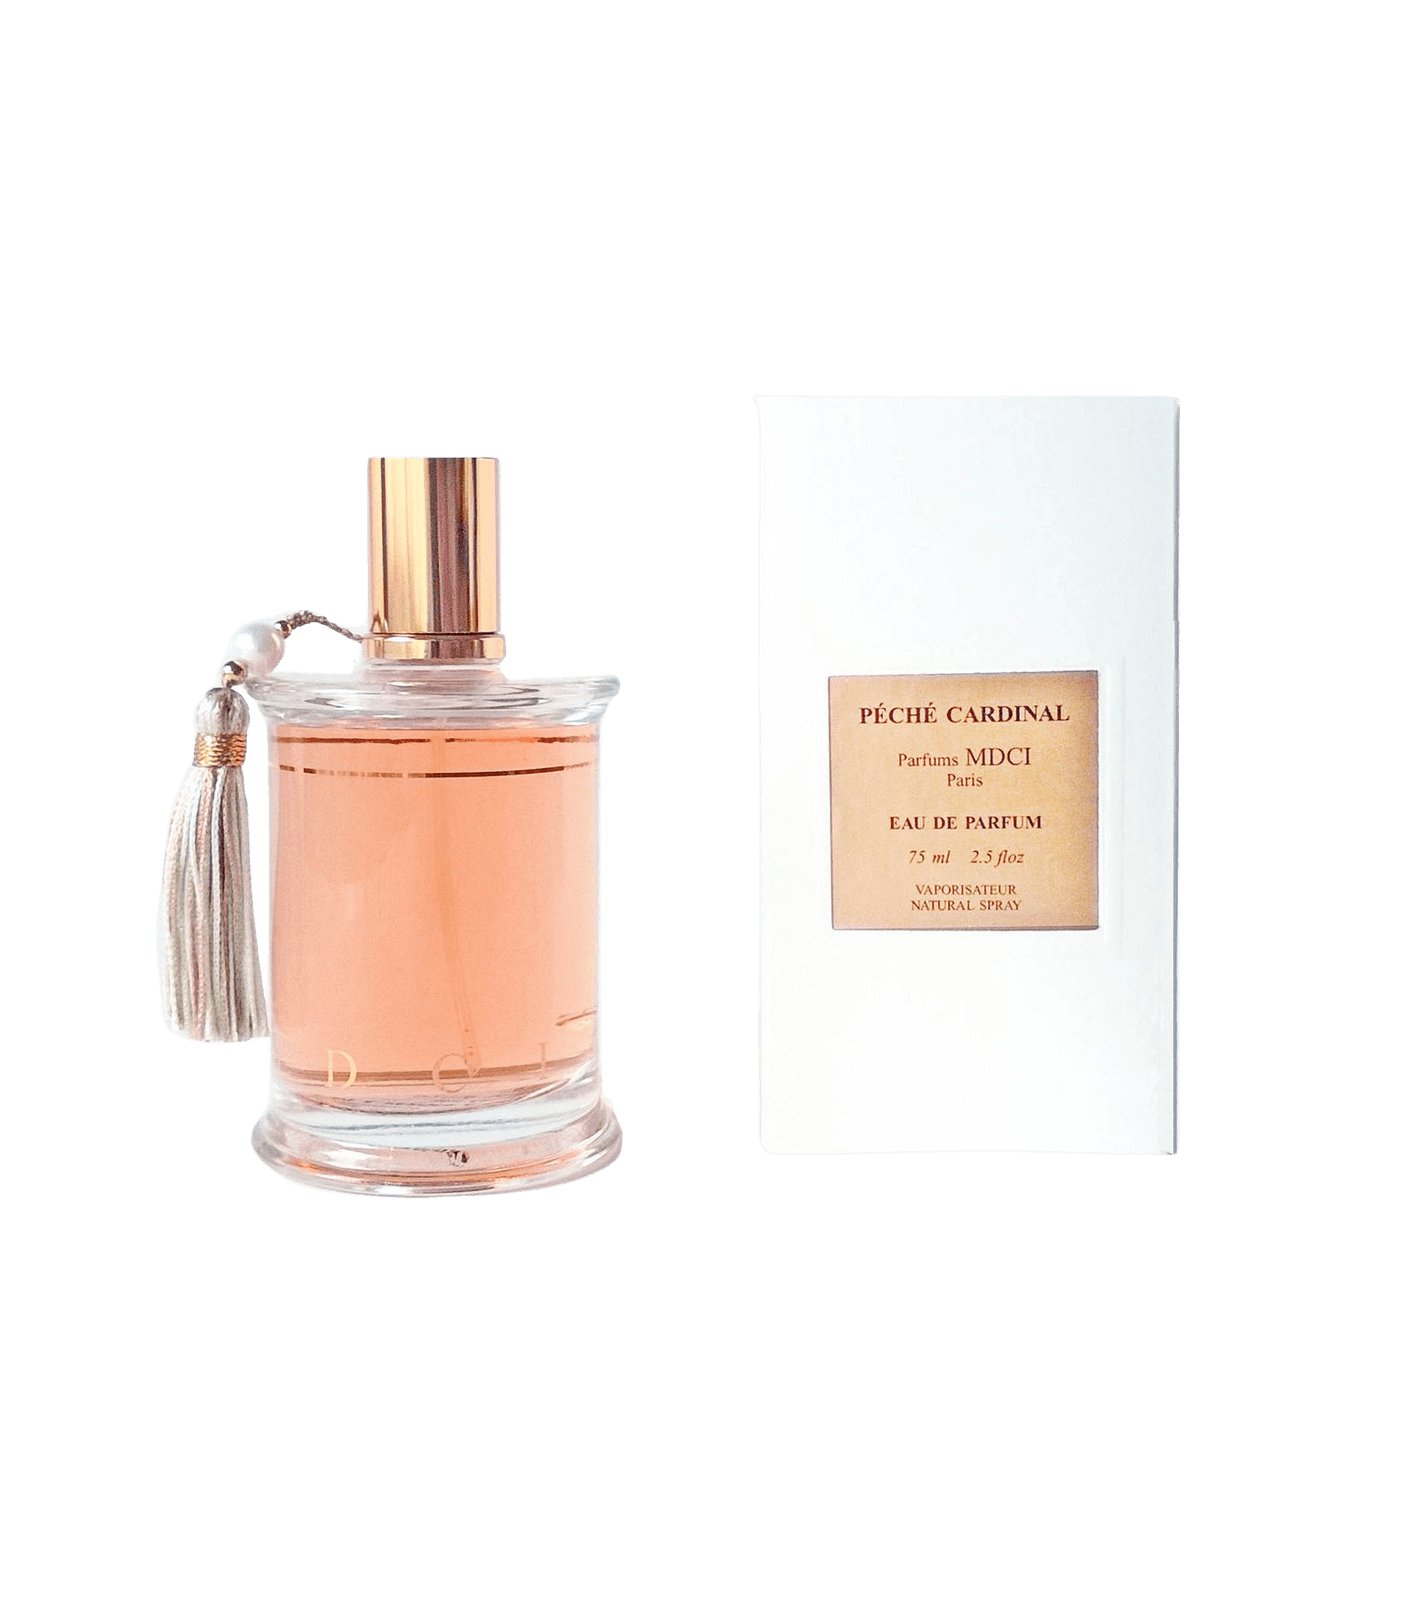 Parfum MDCI Peche Cardinal perfume + package | Perfume Lounge